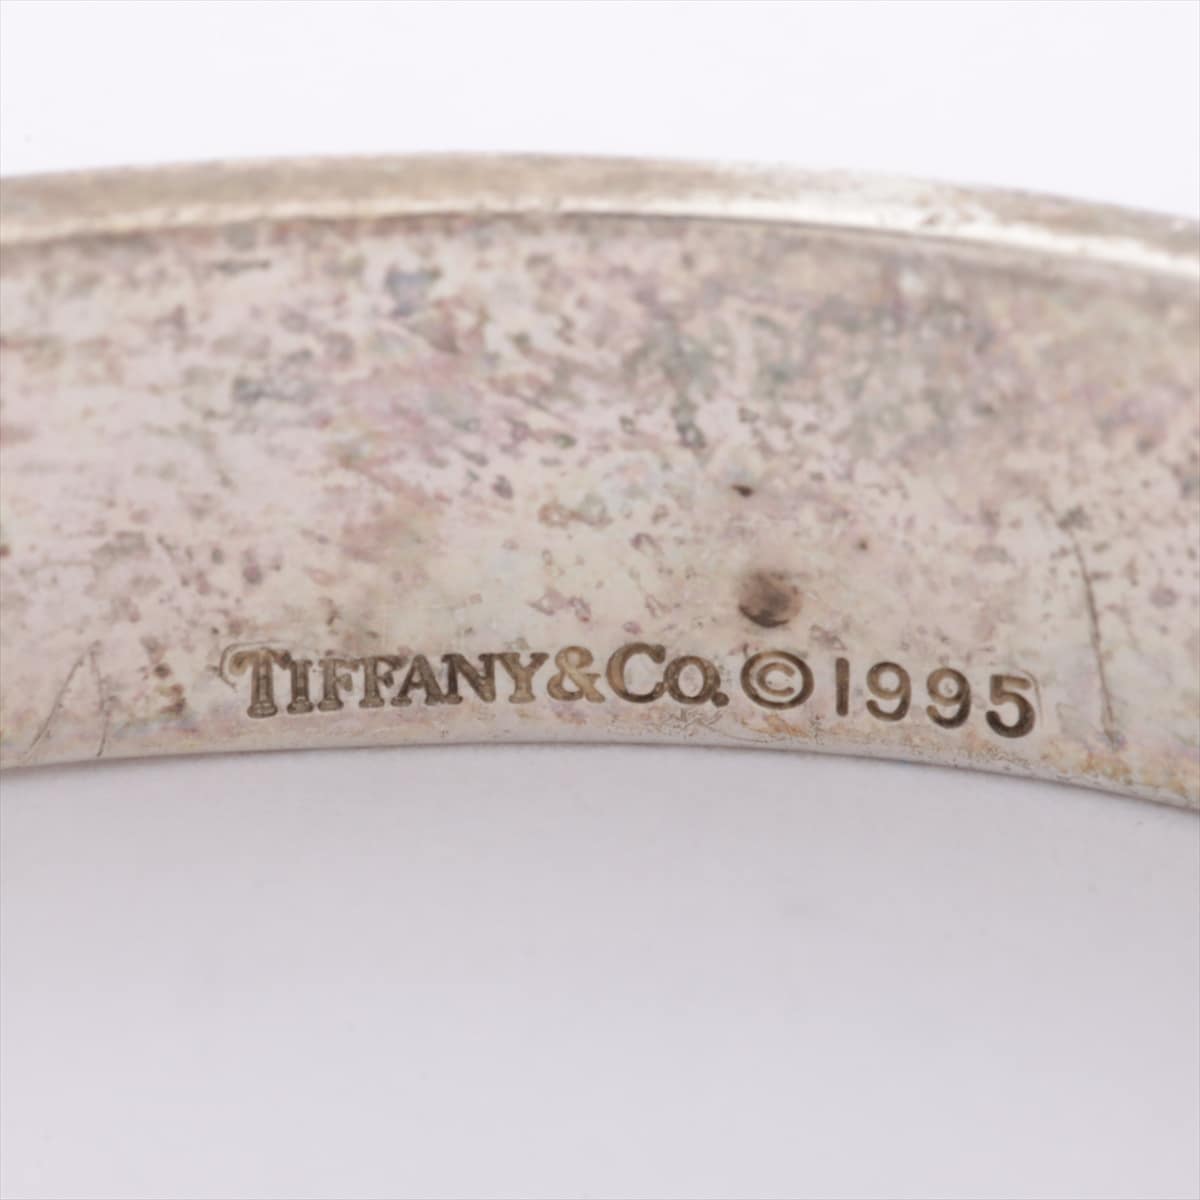 Tiffany Atlas Bangle 925 21.6g Silver